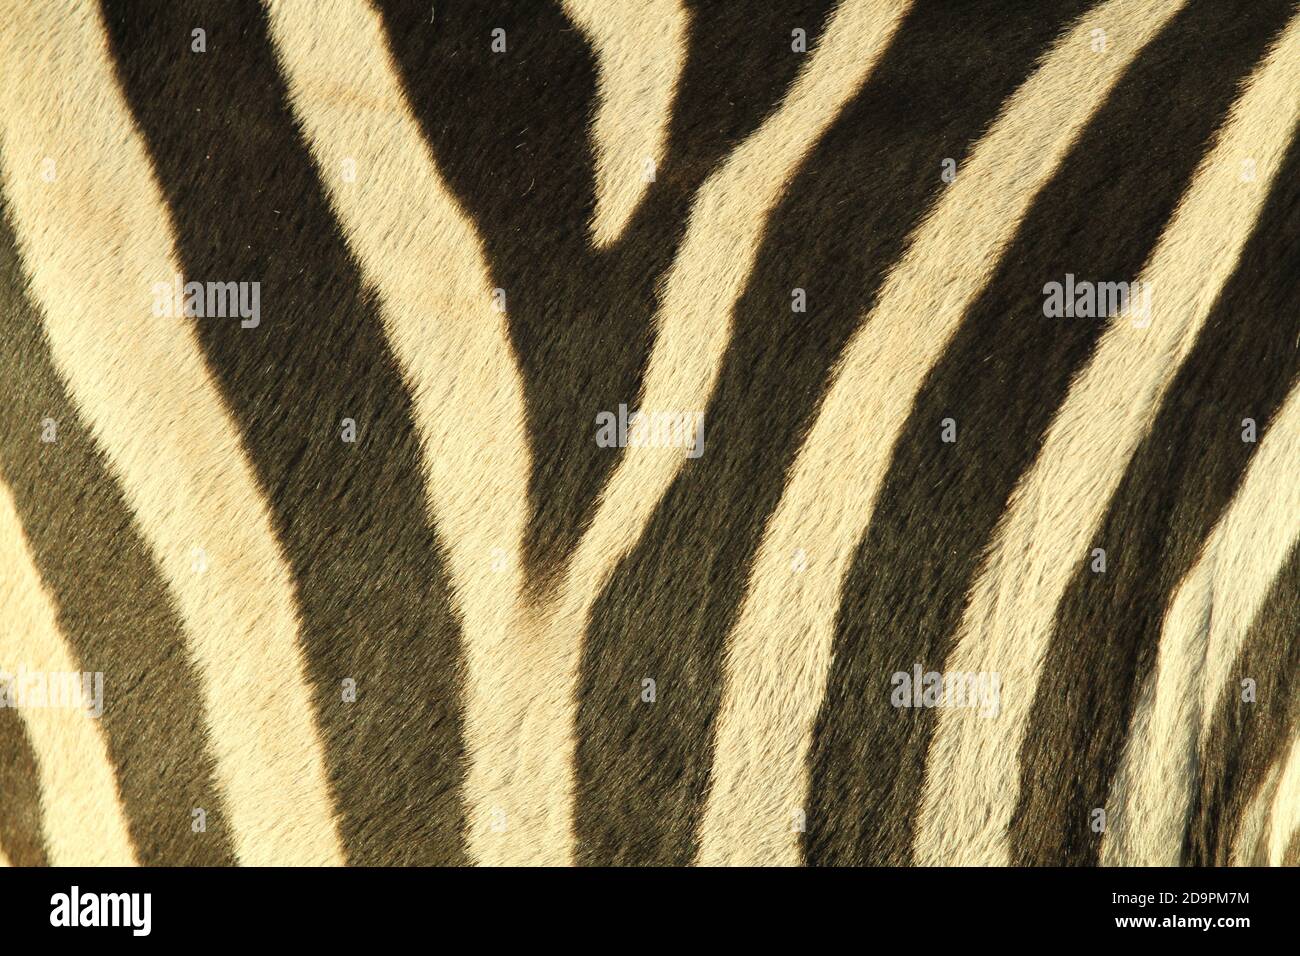 Close up of Plains Zebra (Equus quagga) Skin with fur in a Symmetrical Pattern. Stock Photo